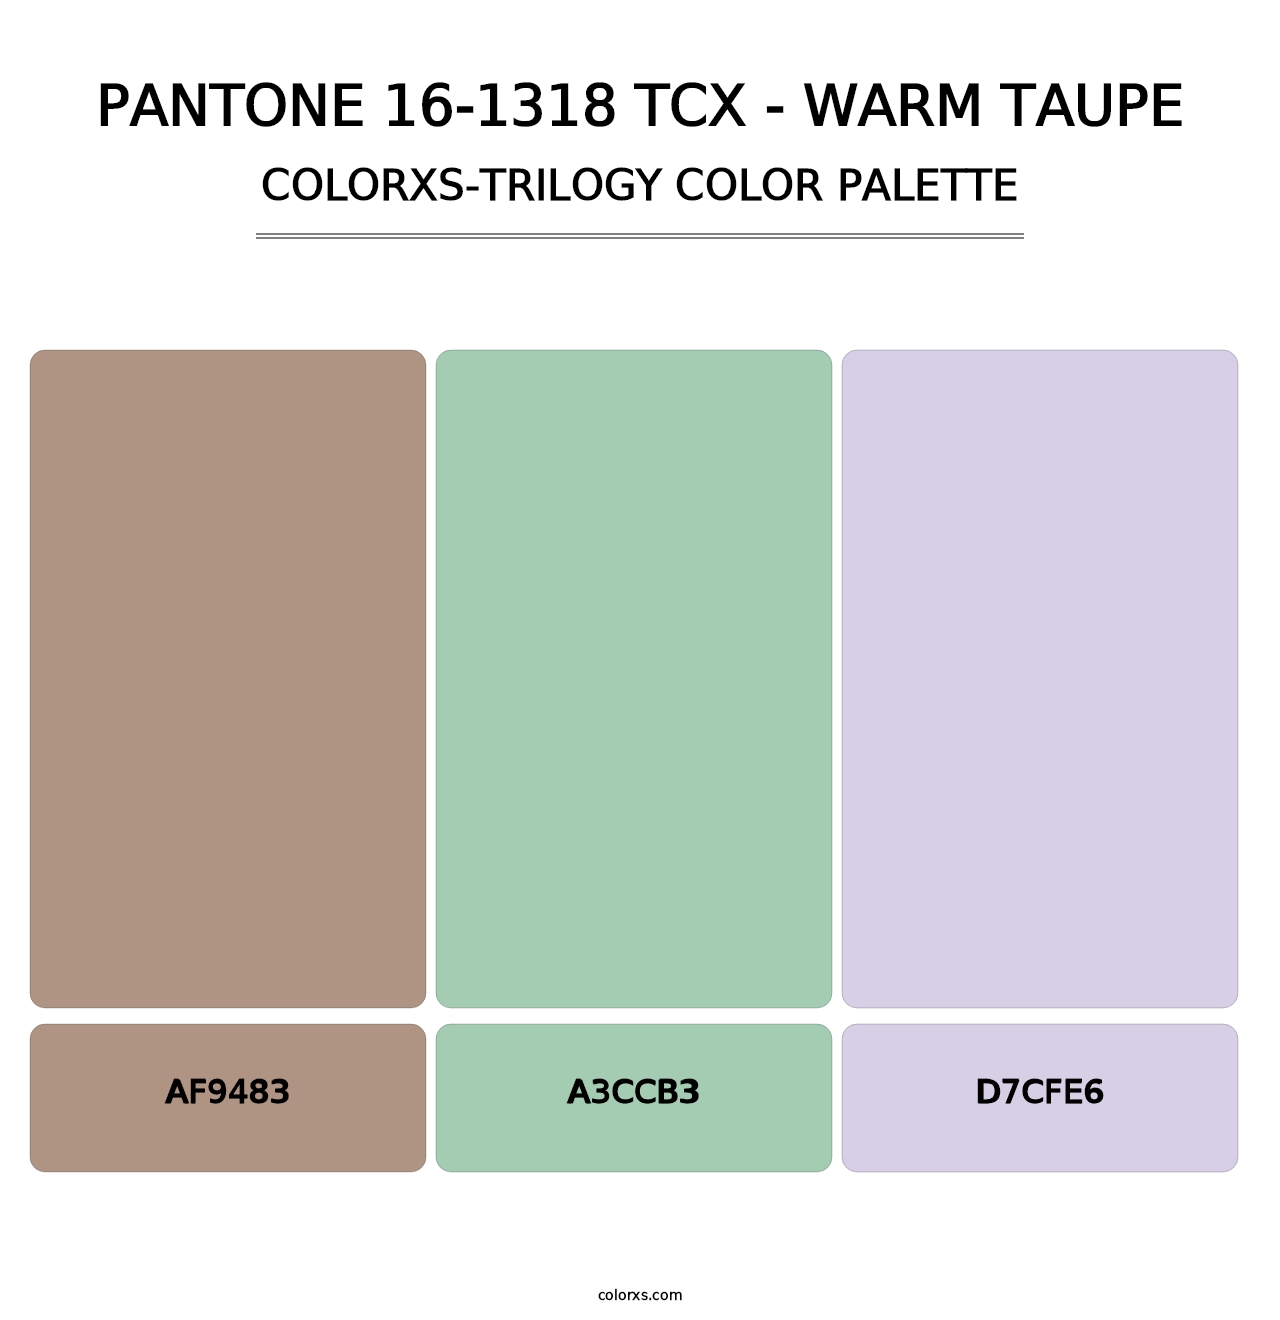 PANTONE 16-1318 TCX - Warm Taupe - Colorxs Trilogy Palette